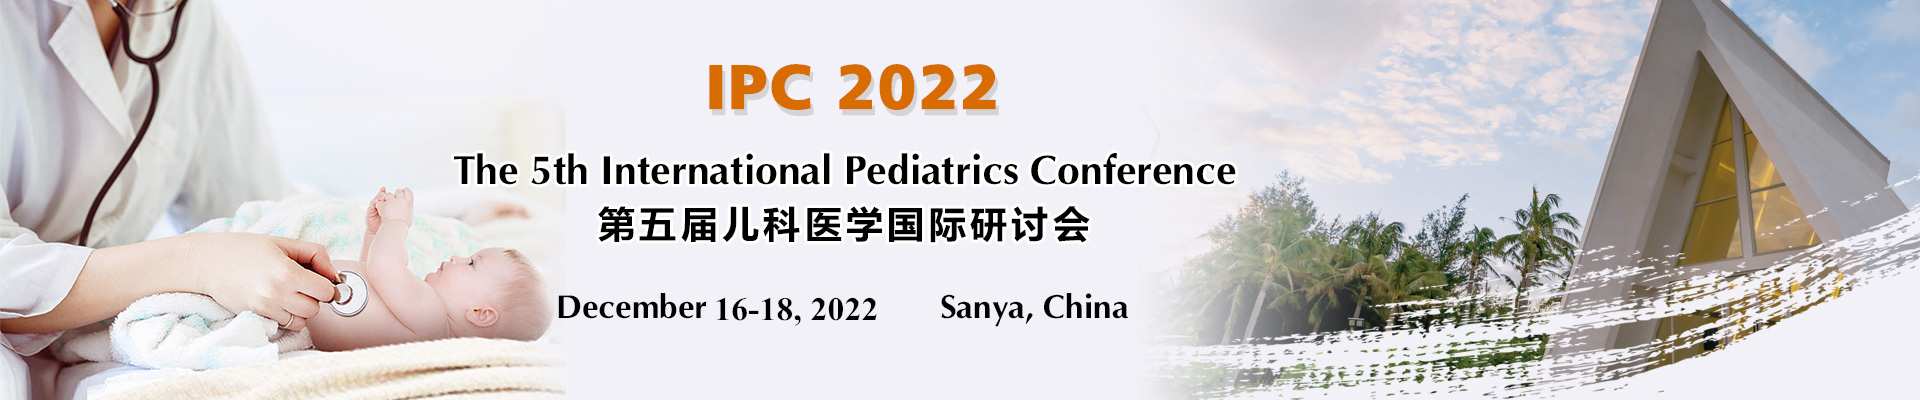 The 5th Int'l Pediatrics Conference (IPC 2022), Sanya, Hainan, China